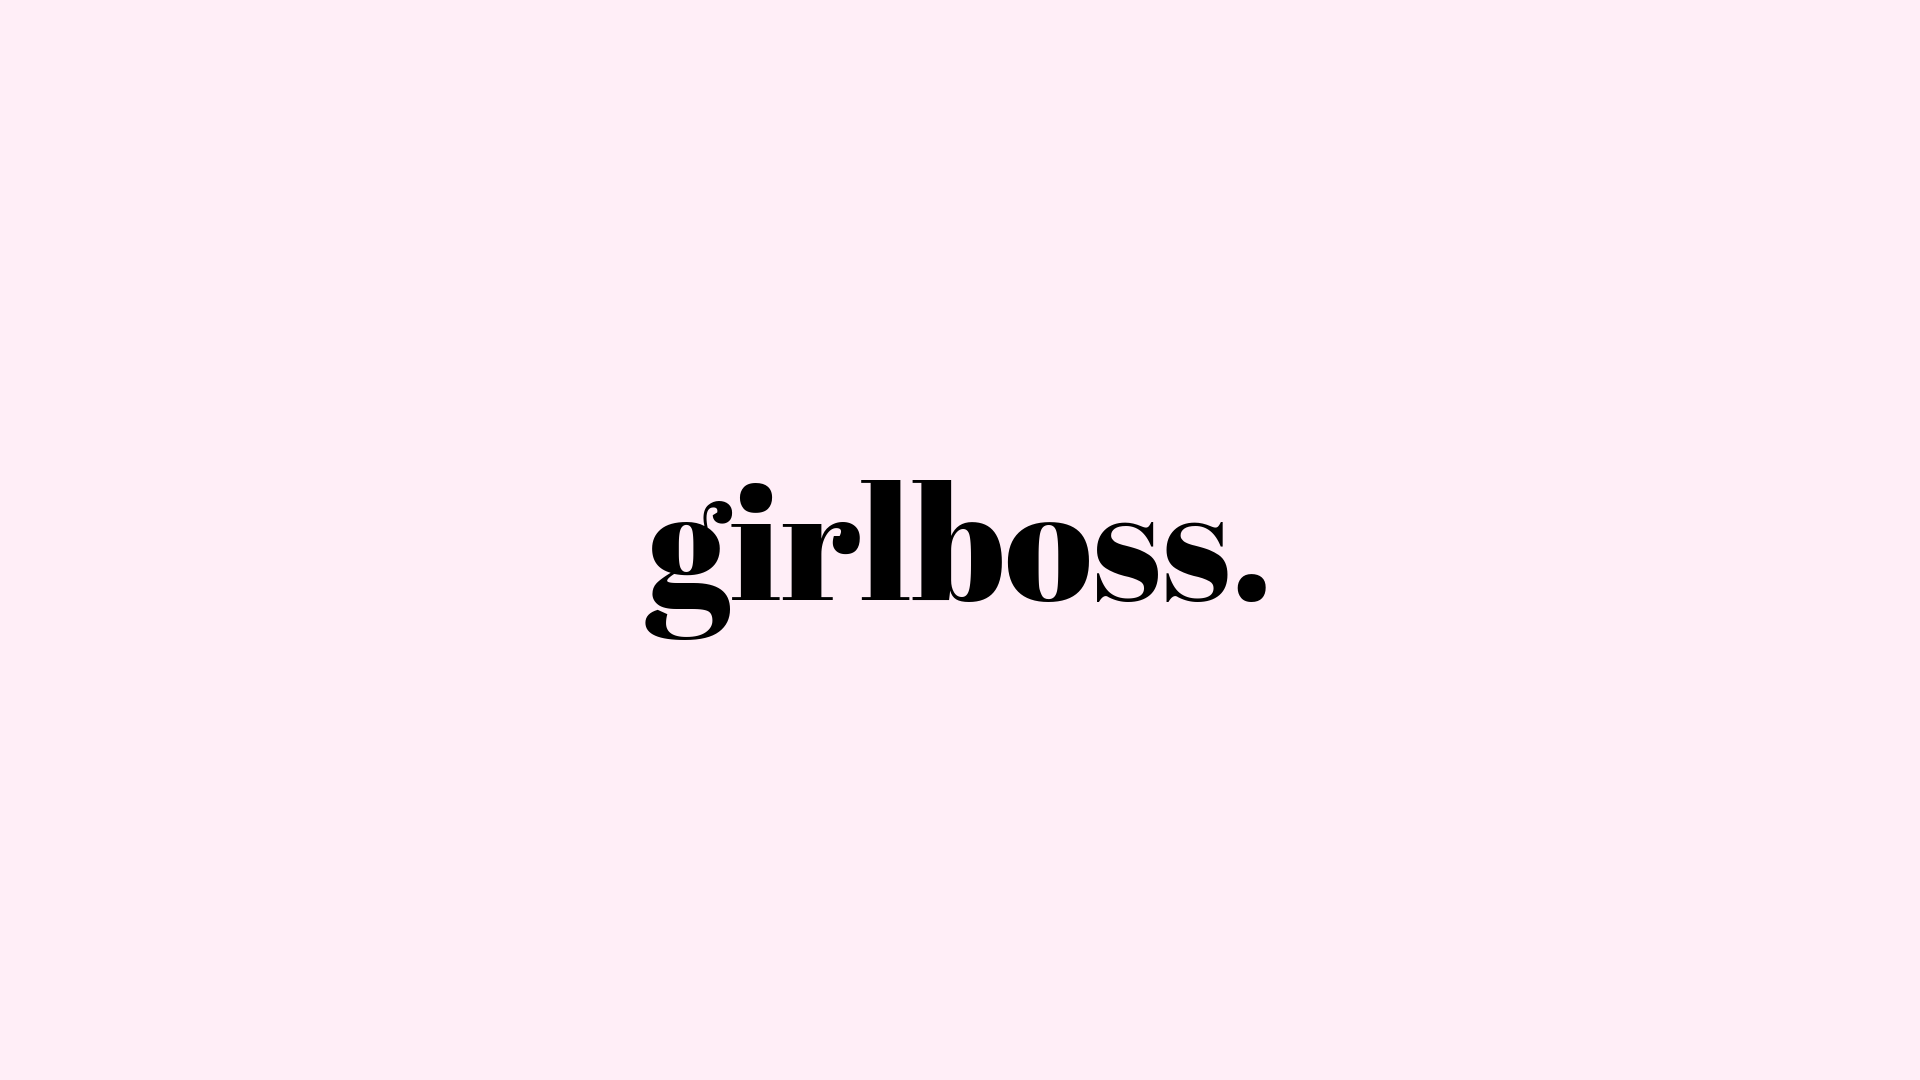 Free Girlboss Desktop Wallpaper. Girl boss wallpaper, Girl